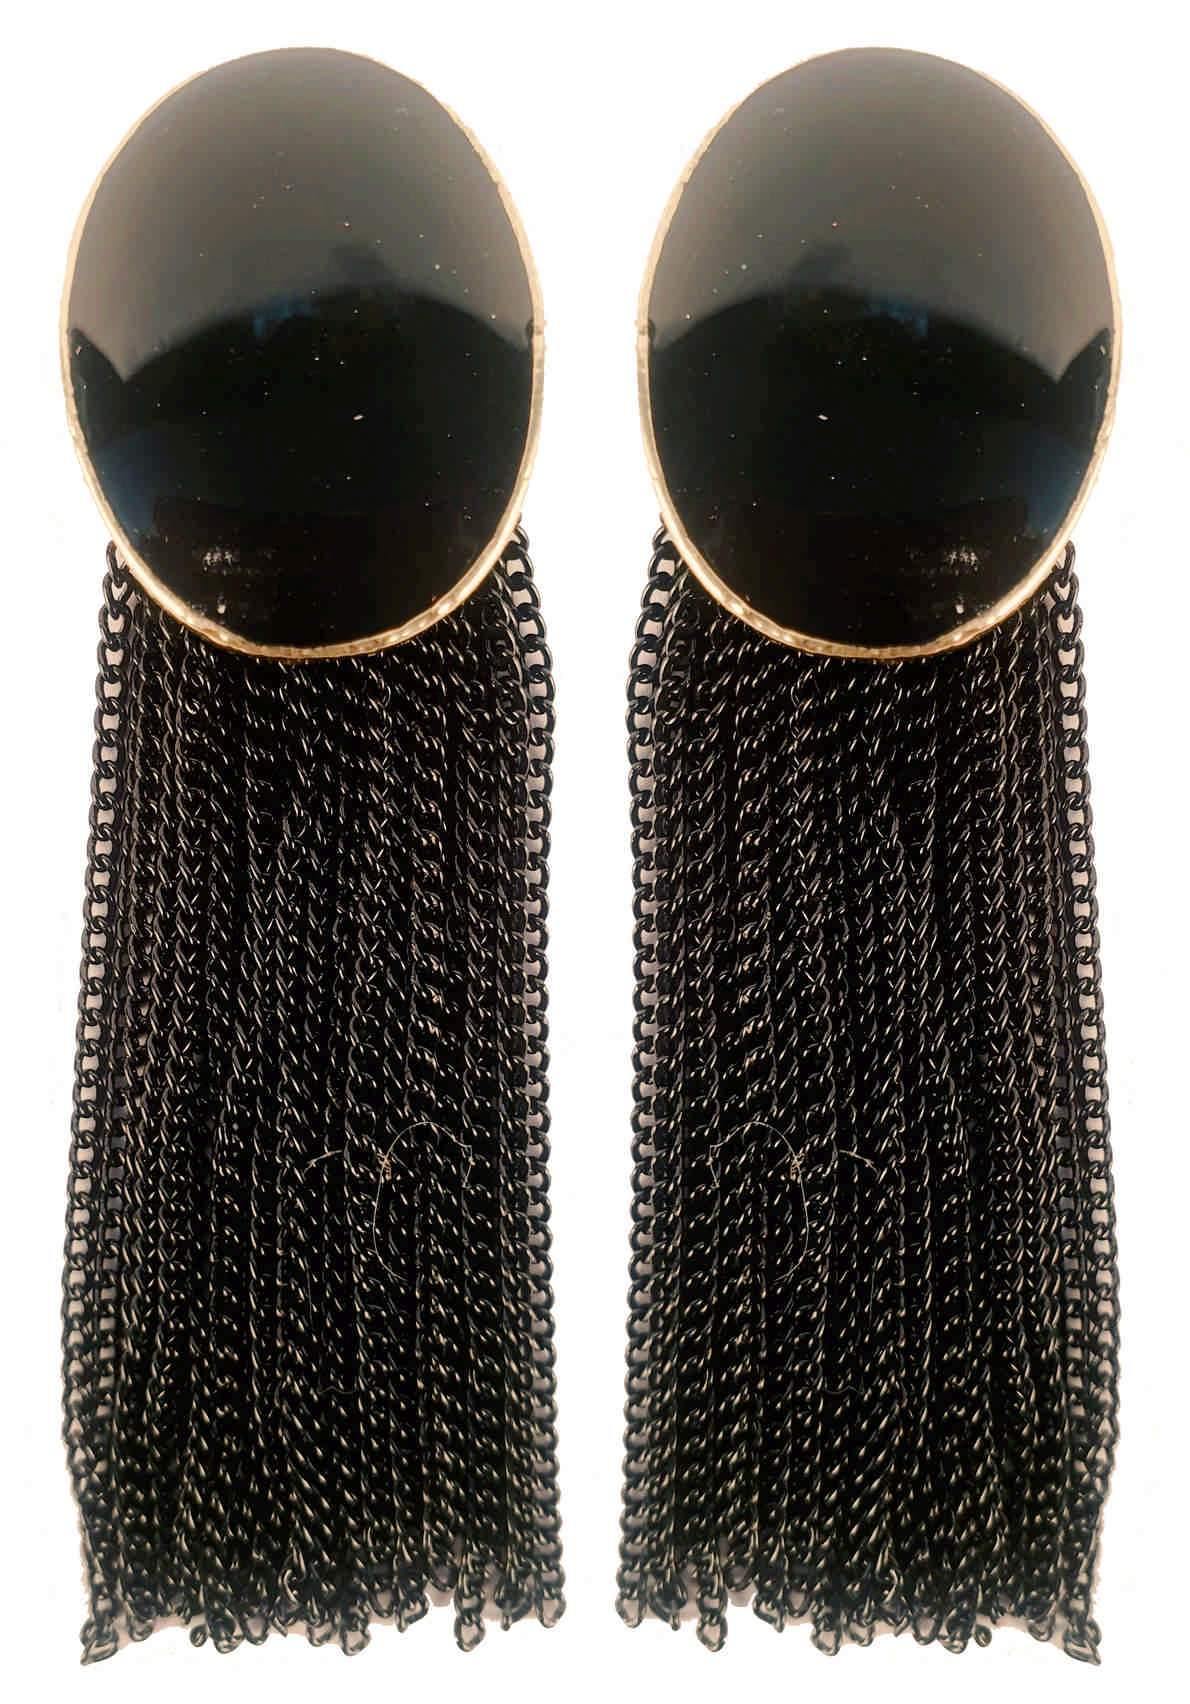 Enamel Metal Patch with Long Tassel Design Artificial Fashion Dangler Earrings Jhumka for Girls Women - Indian Petals